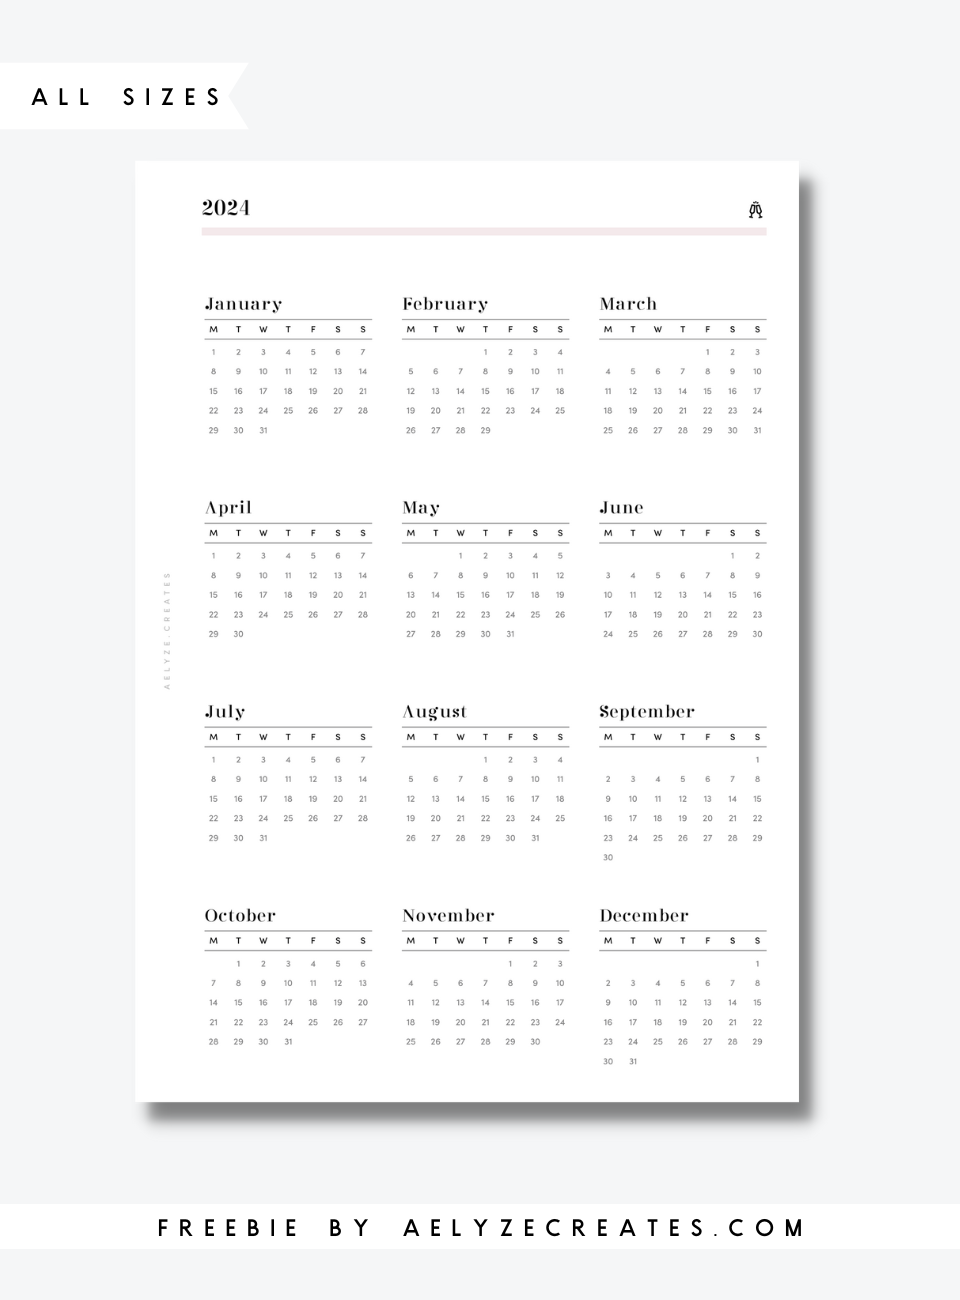 Freebie - All Sizes - 2024 Glance - Aelyzecreates intended for Free Printable Calendar 2024 A4 Size